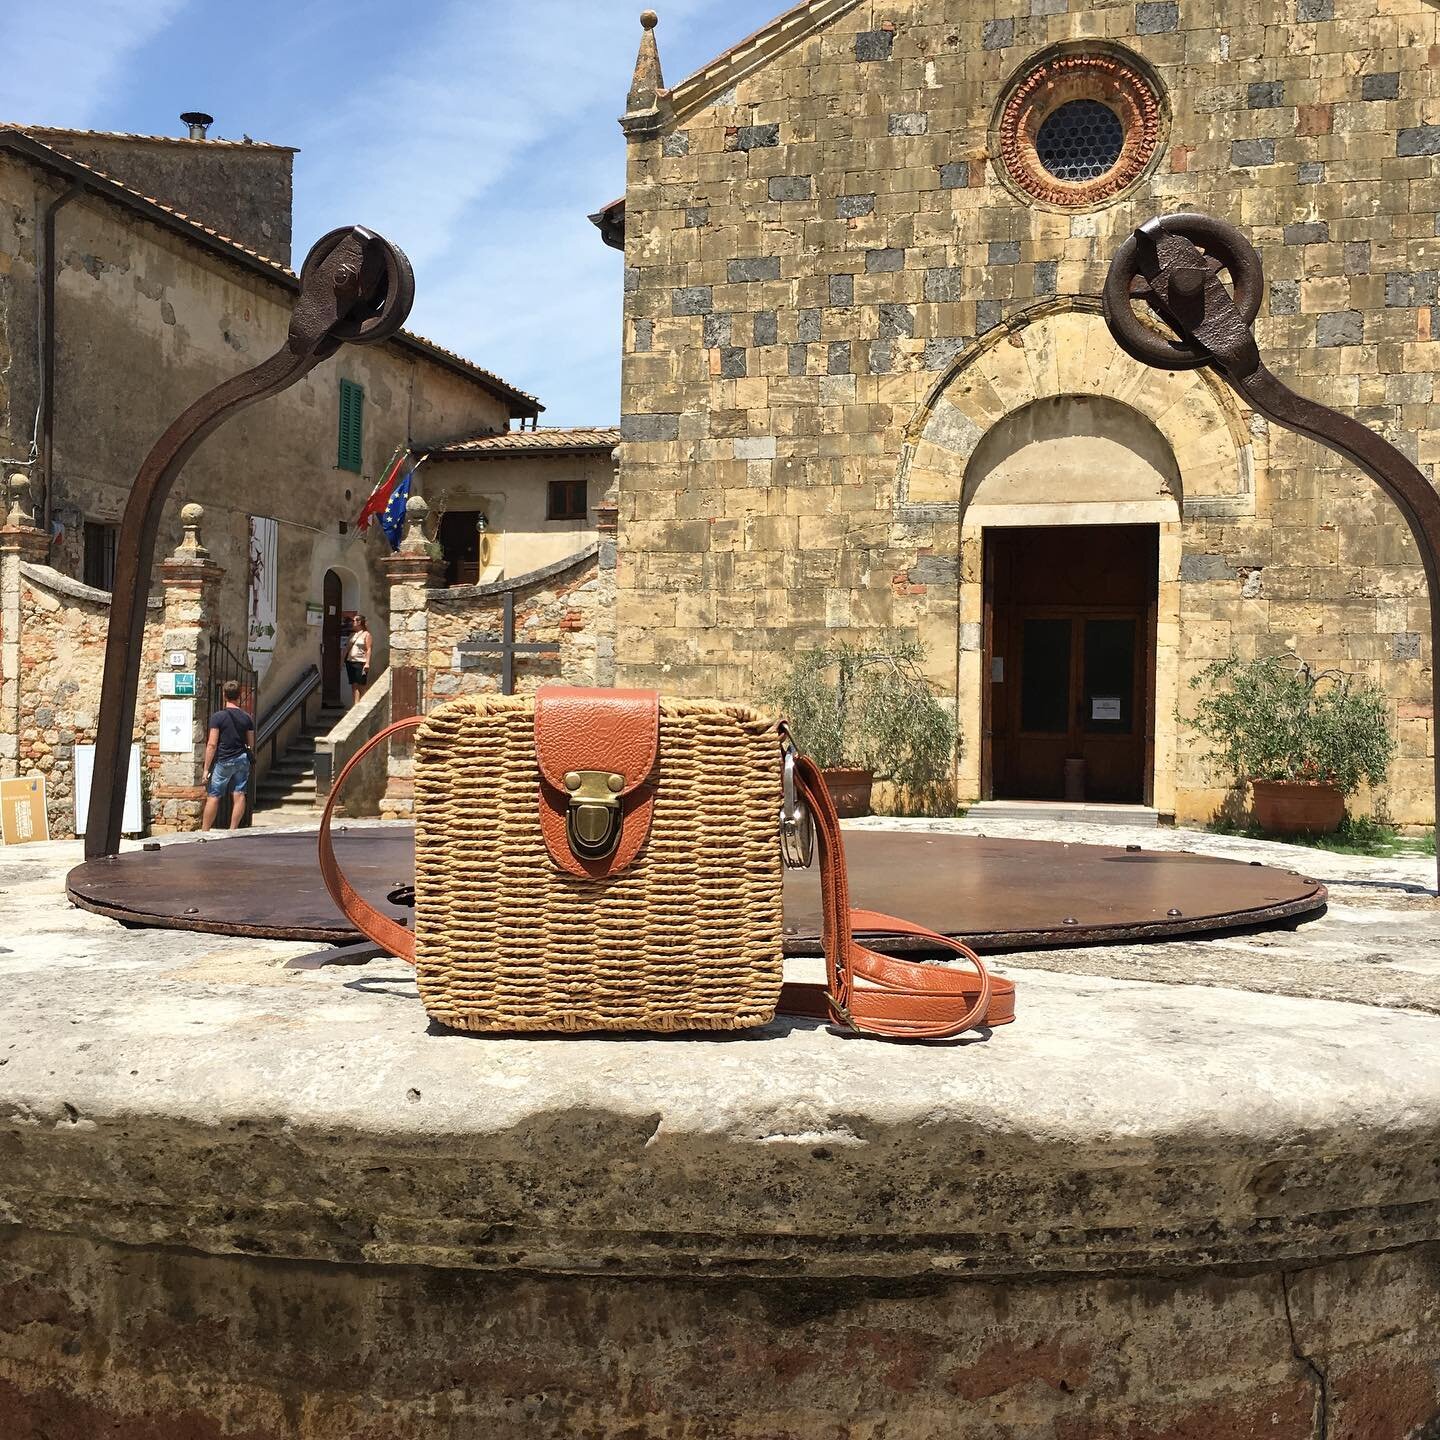 Imagine bags travel to Monteriggioni 🇮🇹☀️🌾
.
.
.
.
www.imagine-shop.gr
#imagine #style #summer #bag #fashiongram #instastyle #agriturismo #tuscana #italy #photooftheday #ig_greece #follow #neaerythraia #imaginegirl #monteriggioni